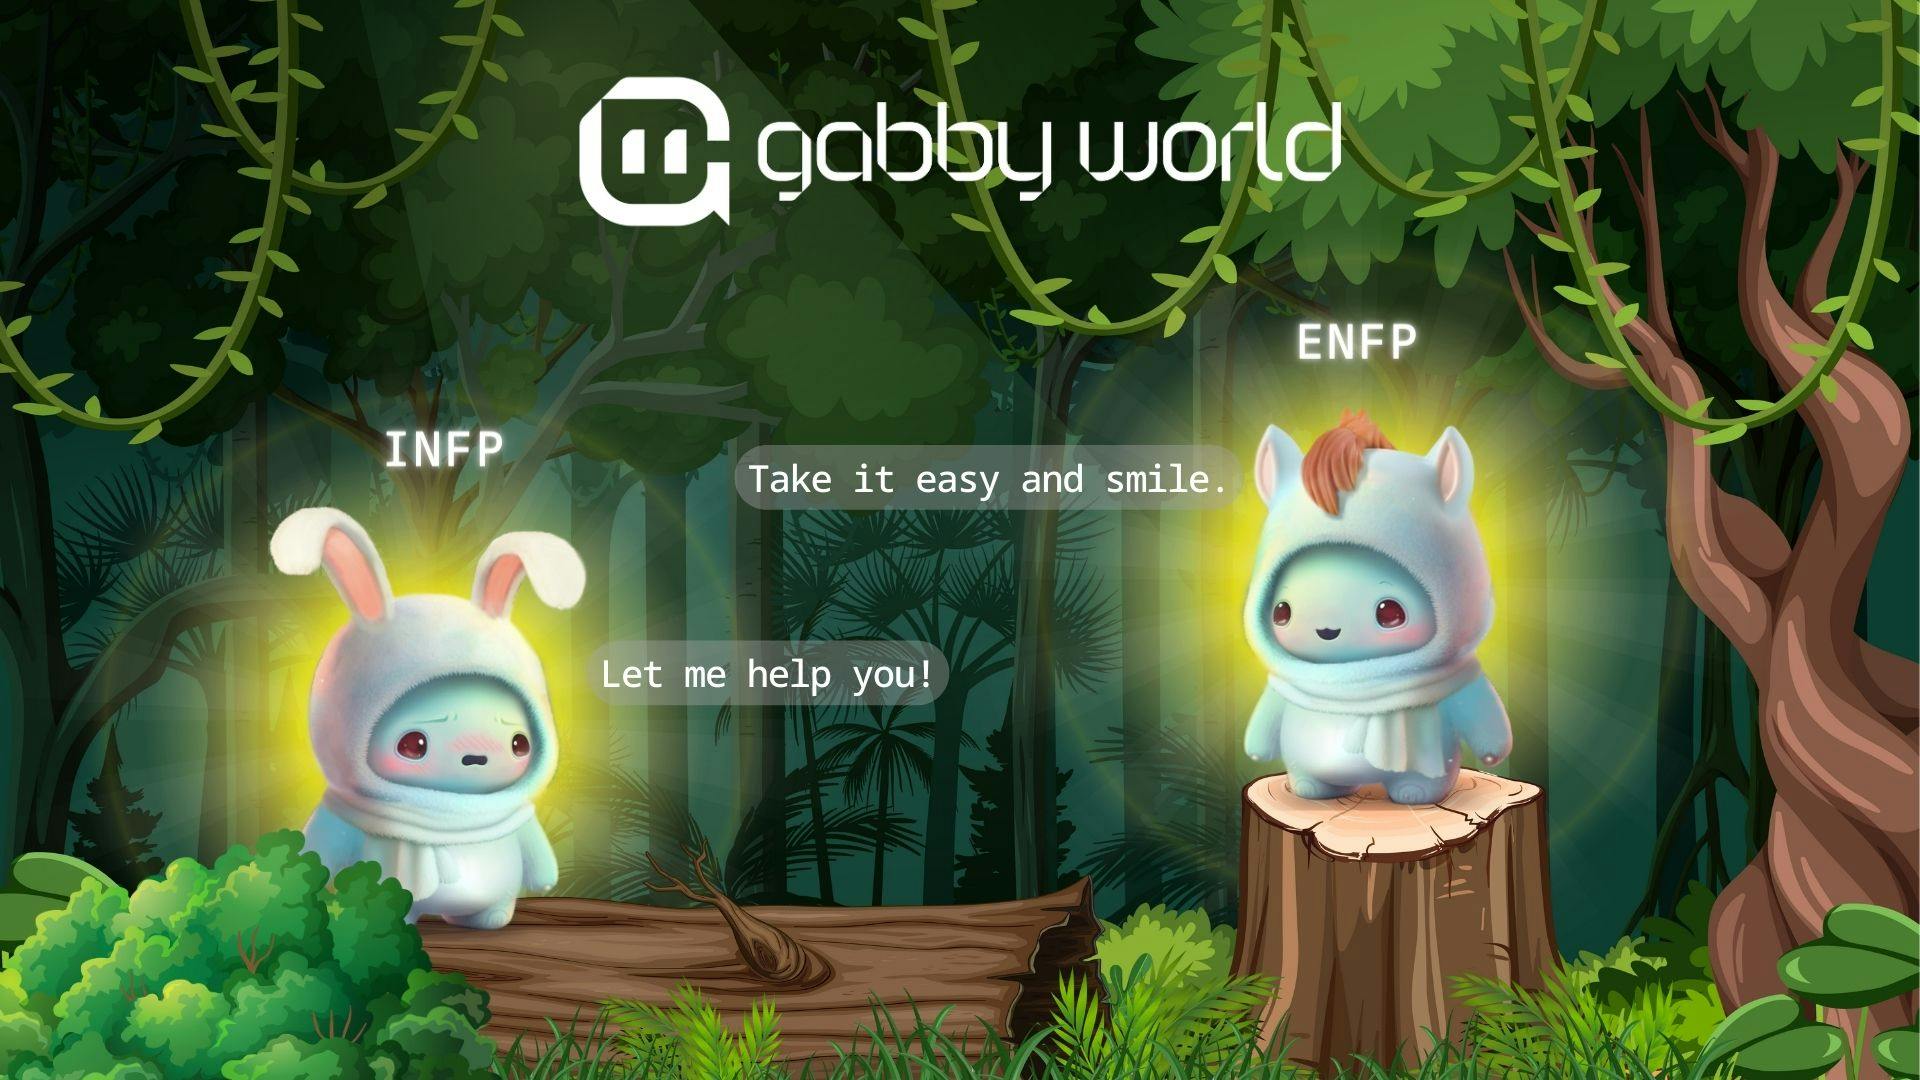 Gabby world game image 2.jpg